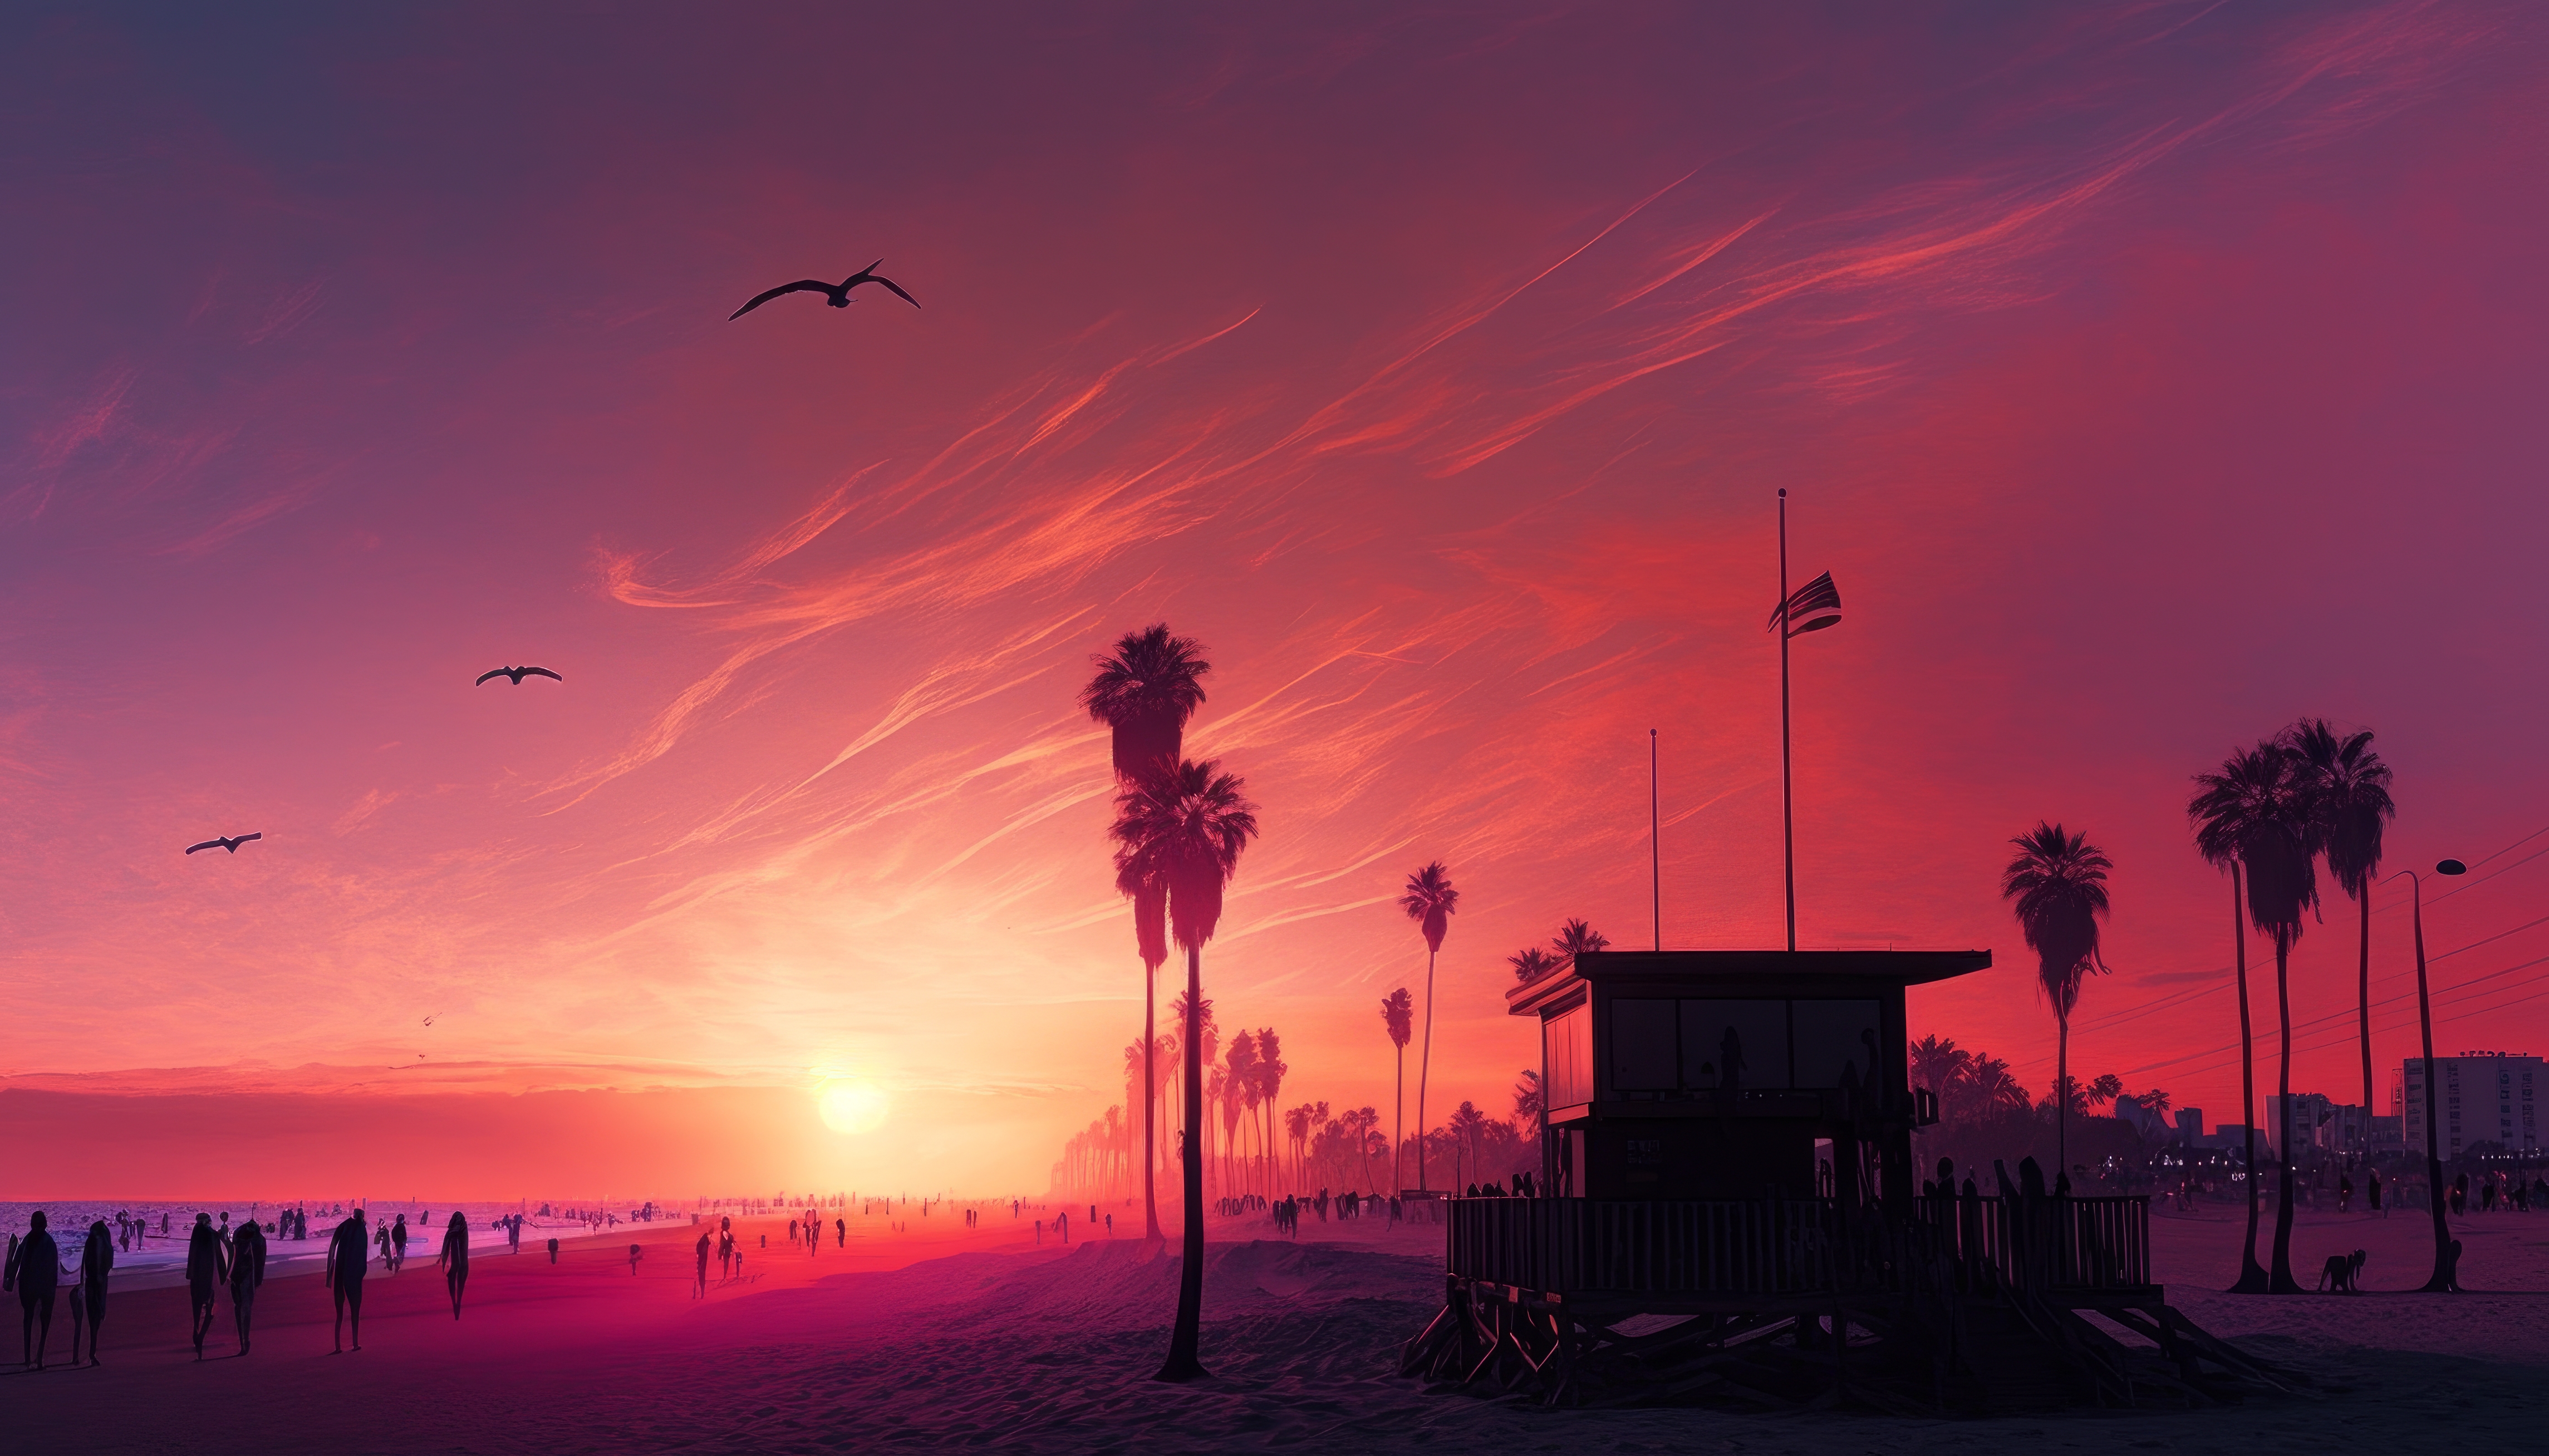 Ai Art Venice Beach Sunset Palm Trees Sunset Glow Silhouette People 4579x2616